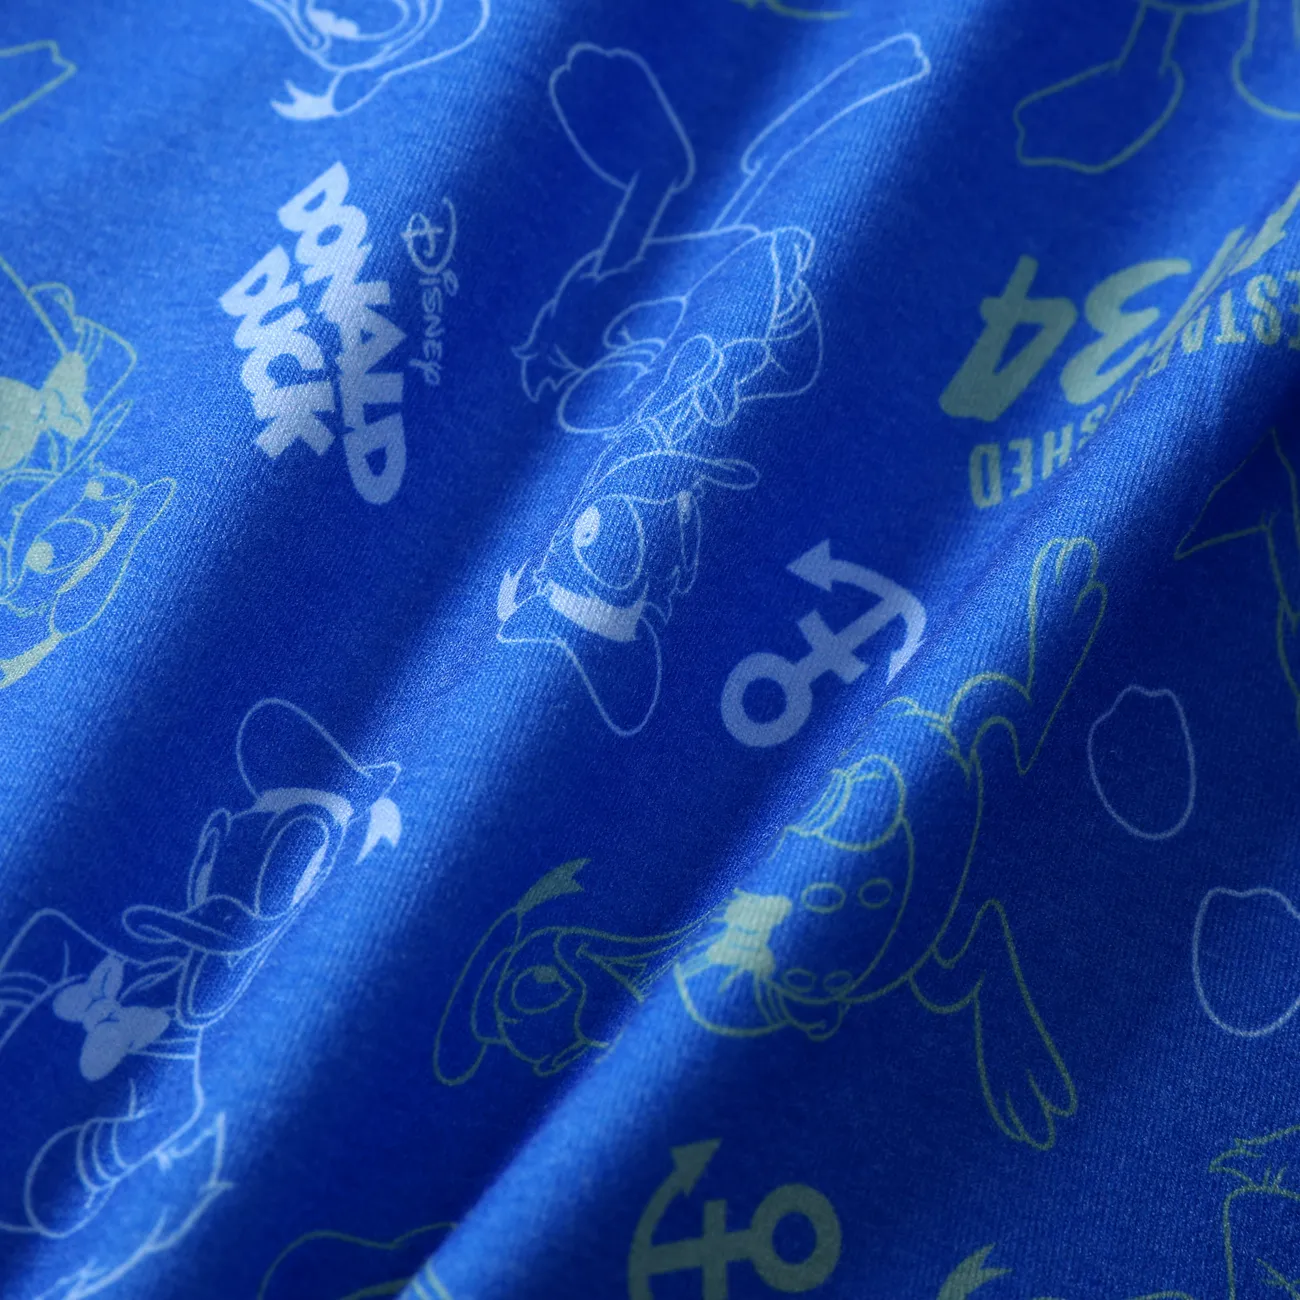 Disney Mickey and Friends Unisexe Enfantin T-Shirt Bleu big image 1